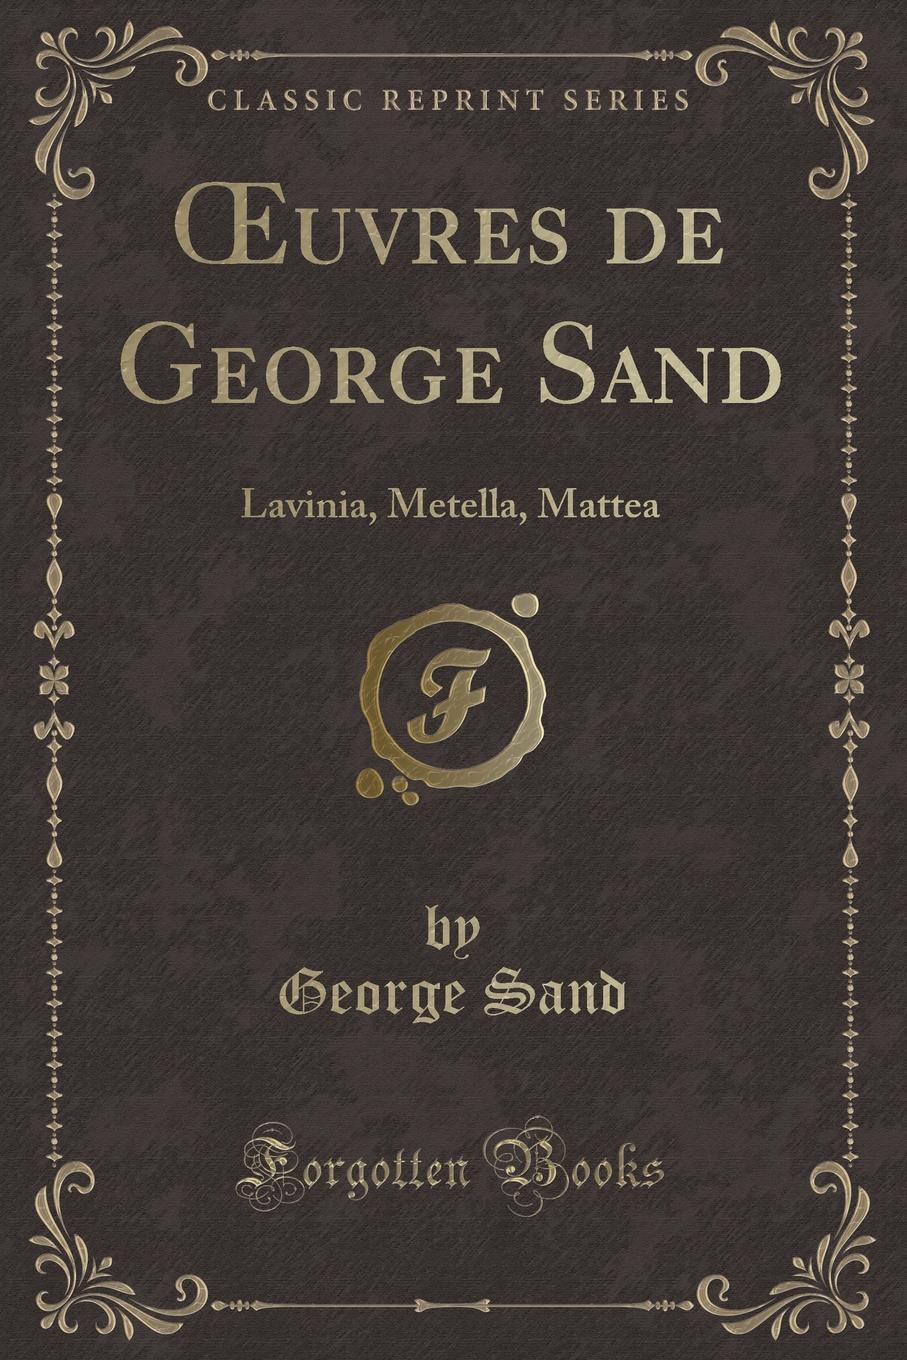 George Sand OEuvres de George Sand. Lavinia, Metella, Mattea (Classic Reprint)